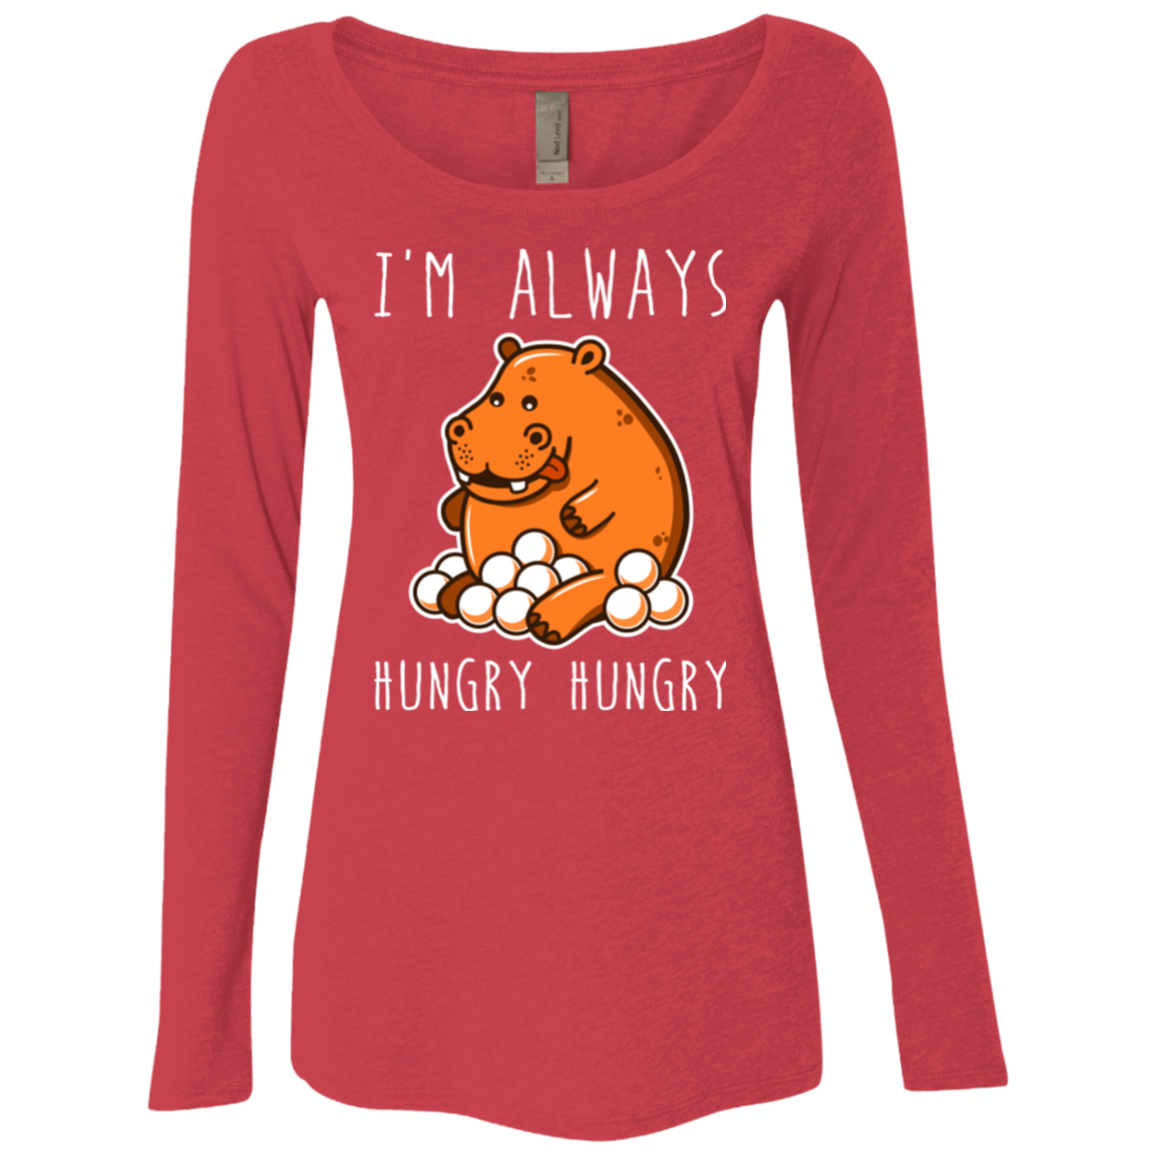 Hungry Hungry Women's Triblend Long Sleeve Shirt